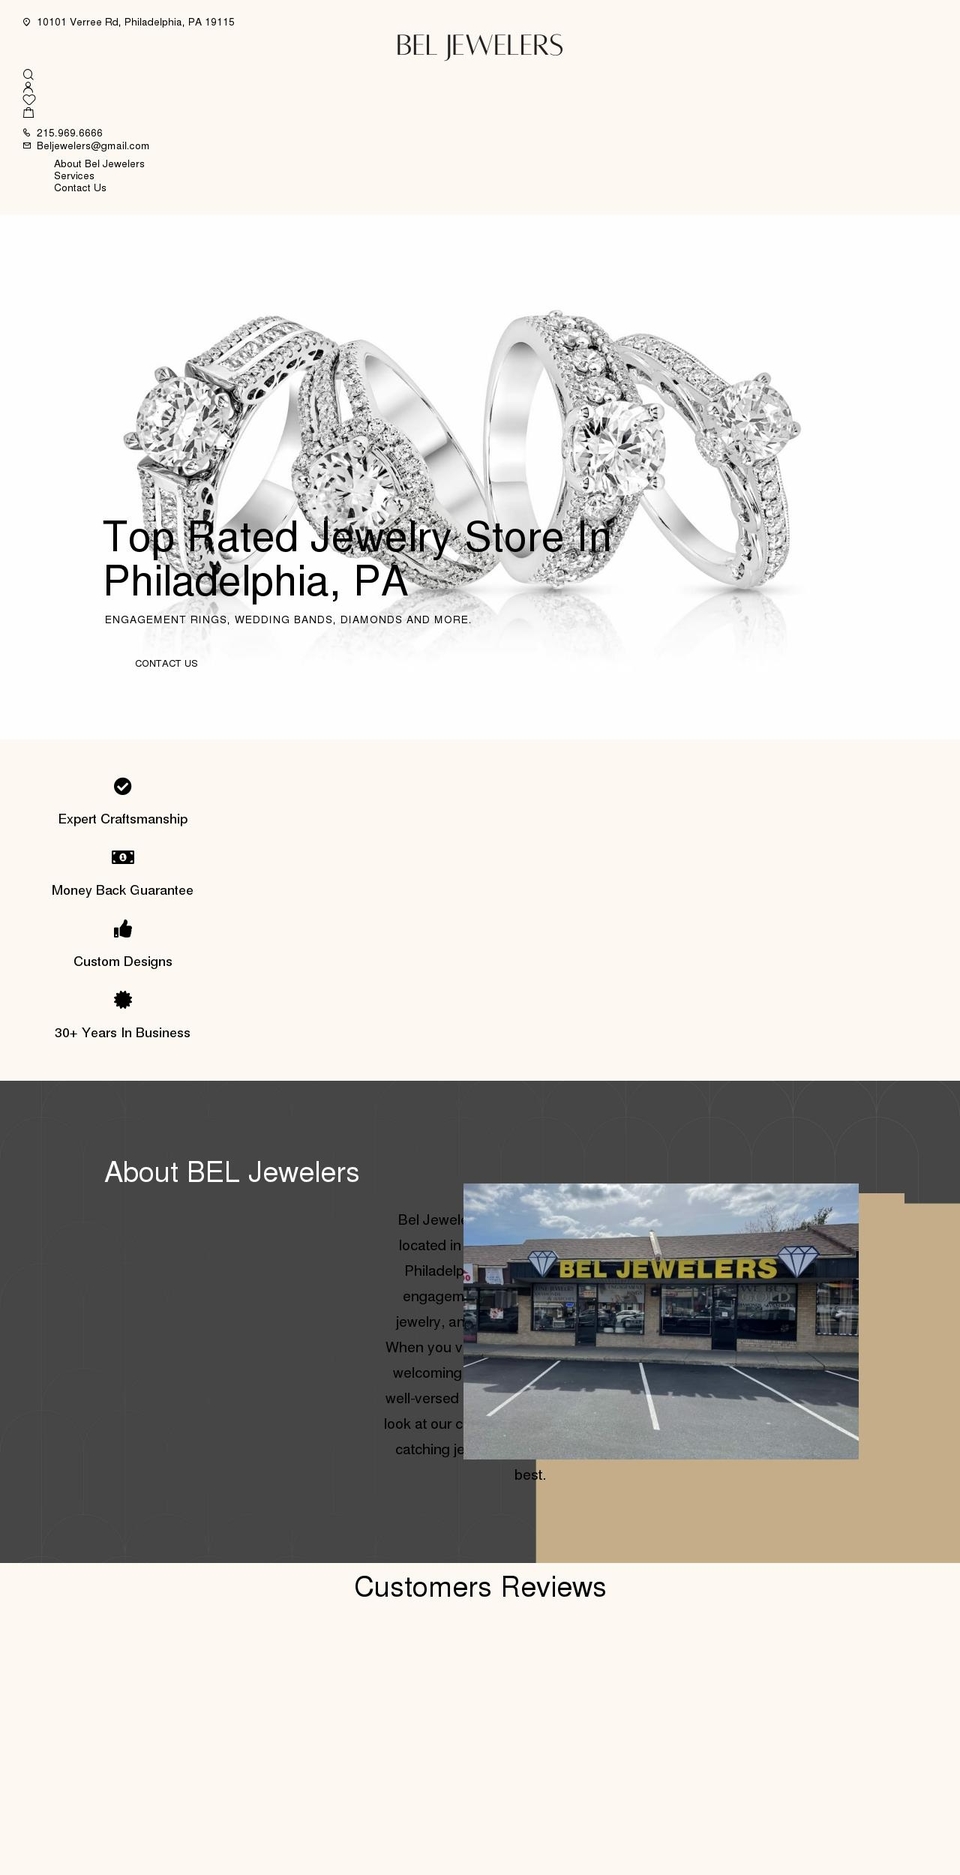 beljewelers.com shopify website screenshot